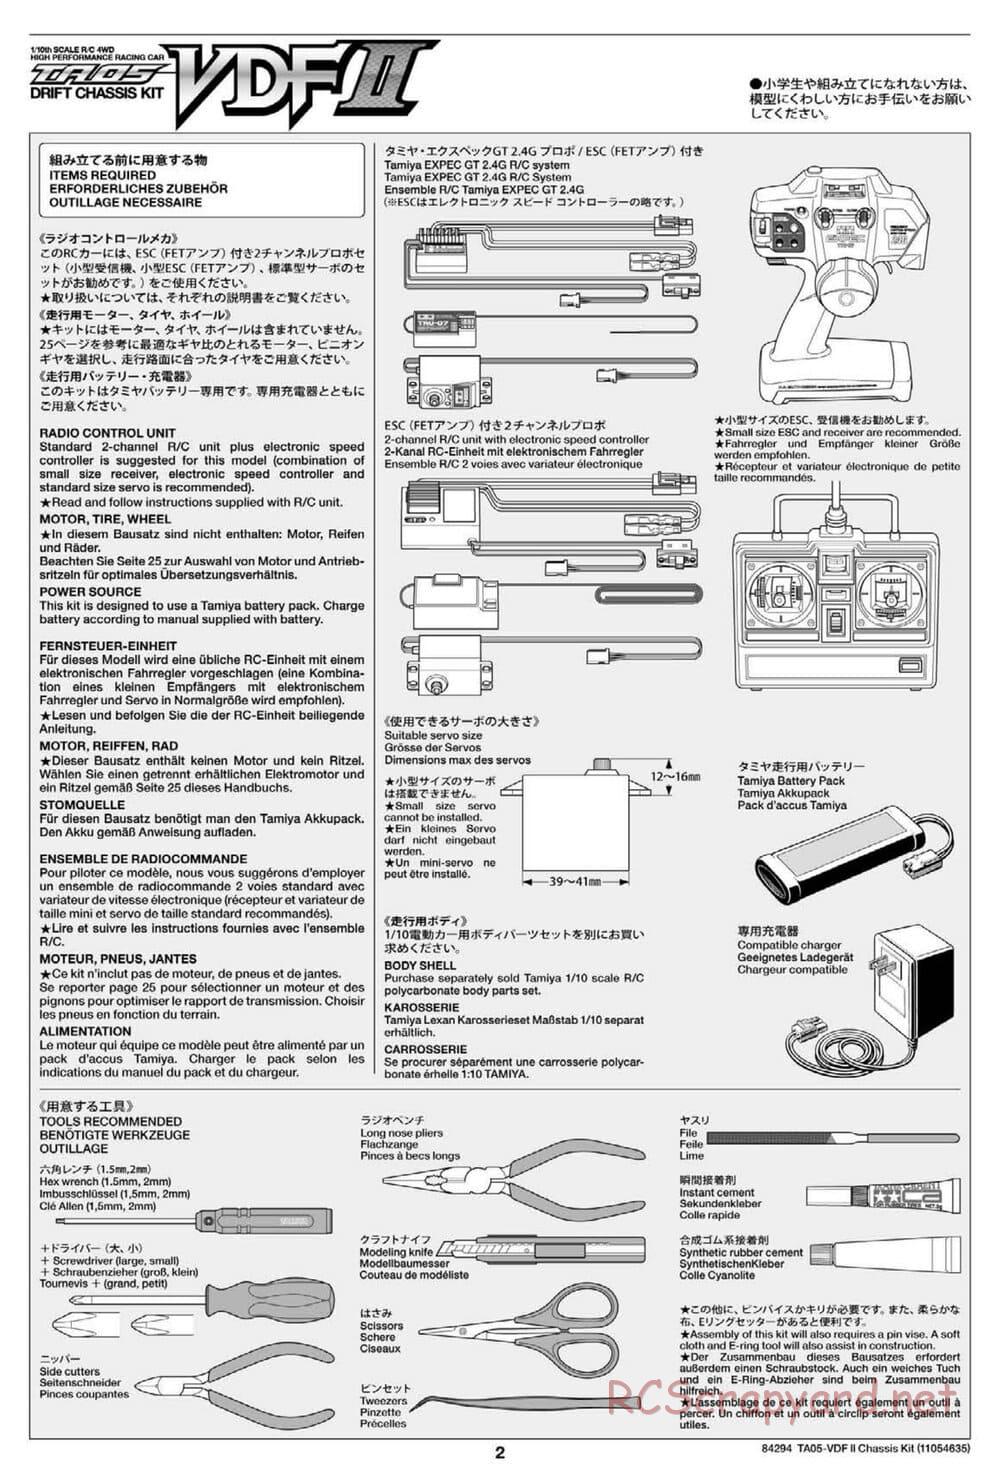 Tamiya - TA05-VDF II Drift Chassis - Manual - Page 2